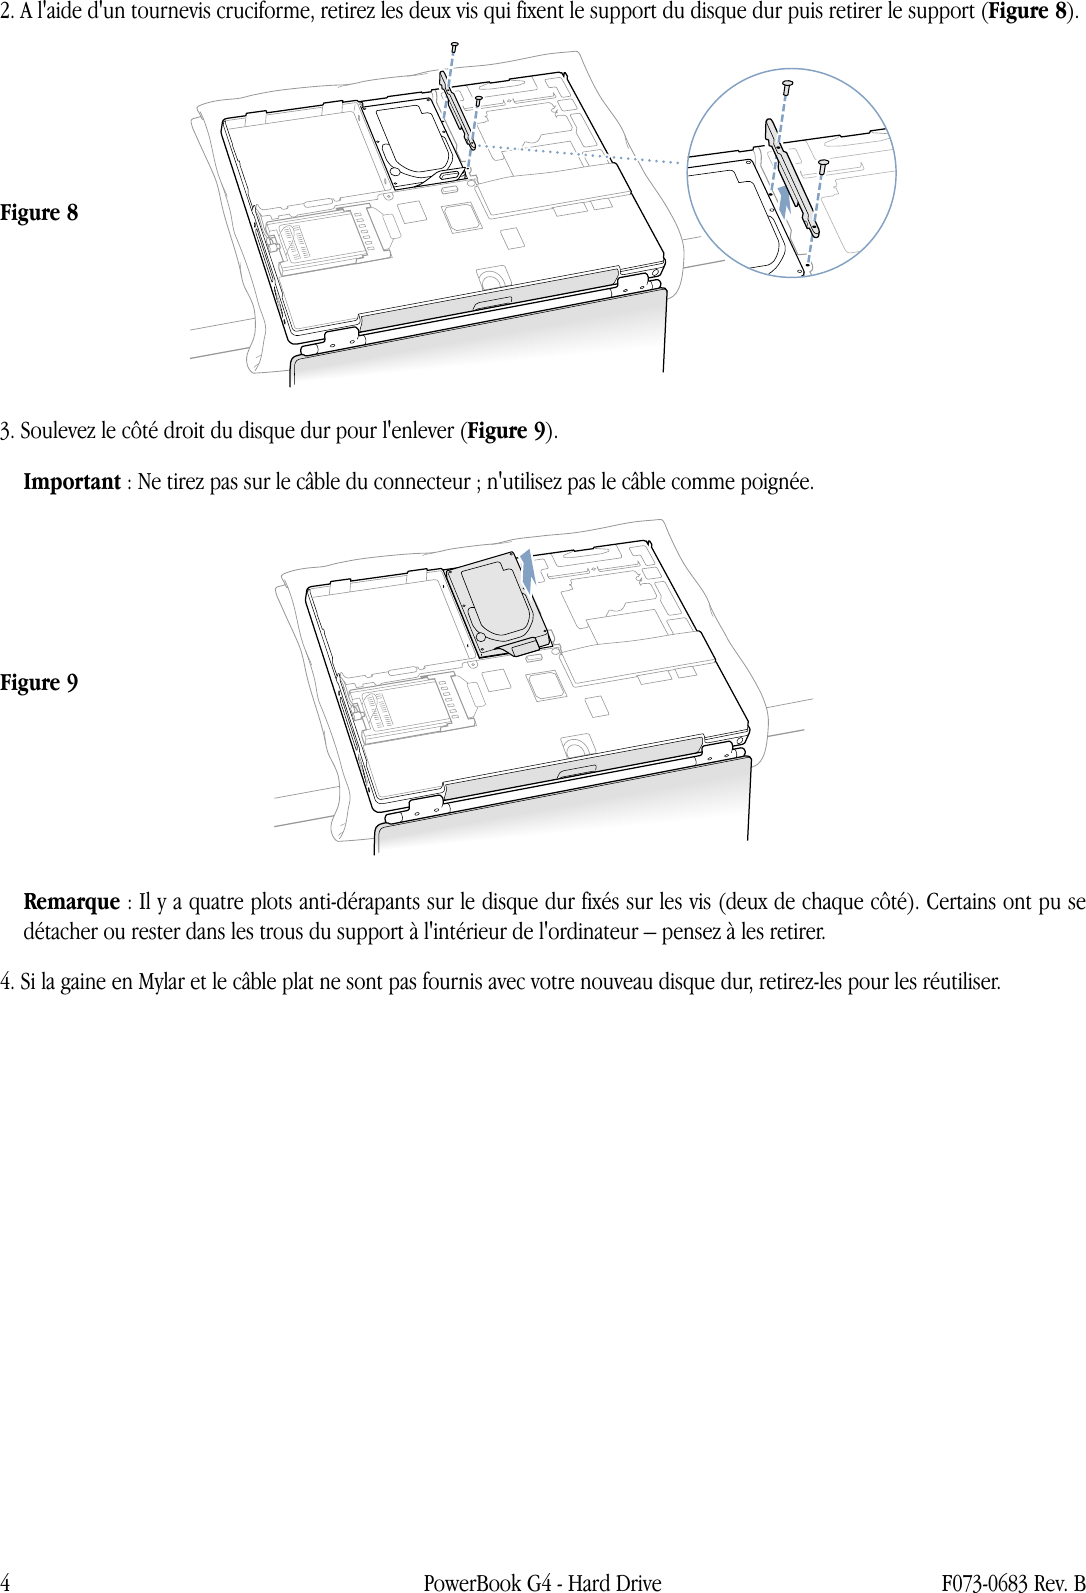 Page 4 of 8 - Apple PowerBook G4 (DVI) Hard Drive User Manual Power Book G4 (DVI, 1GHz/867MHz) - Disque Dur Instructions De Remplacement Pbg4dvi-hd-cip